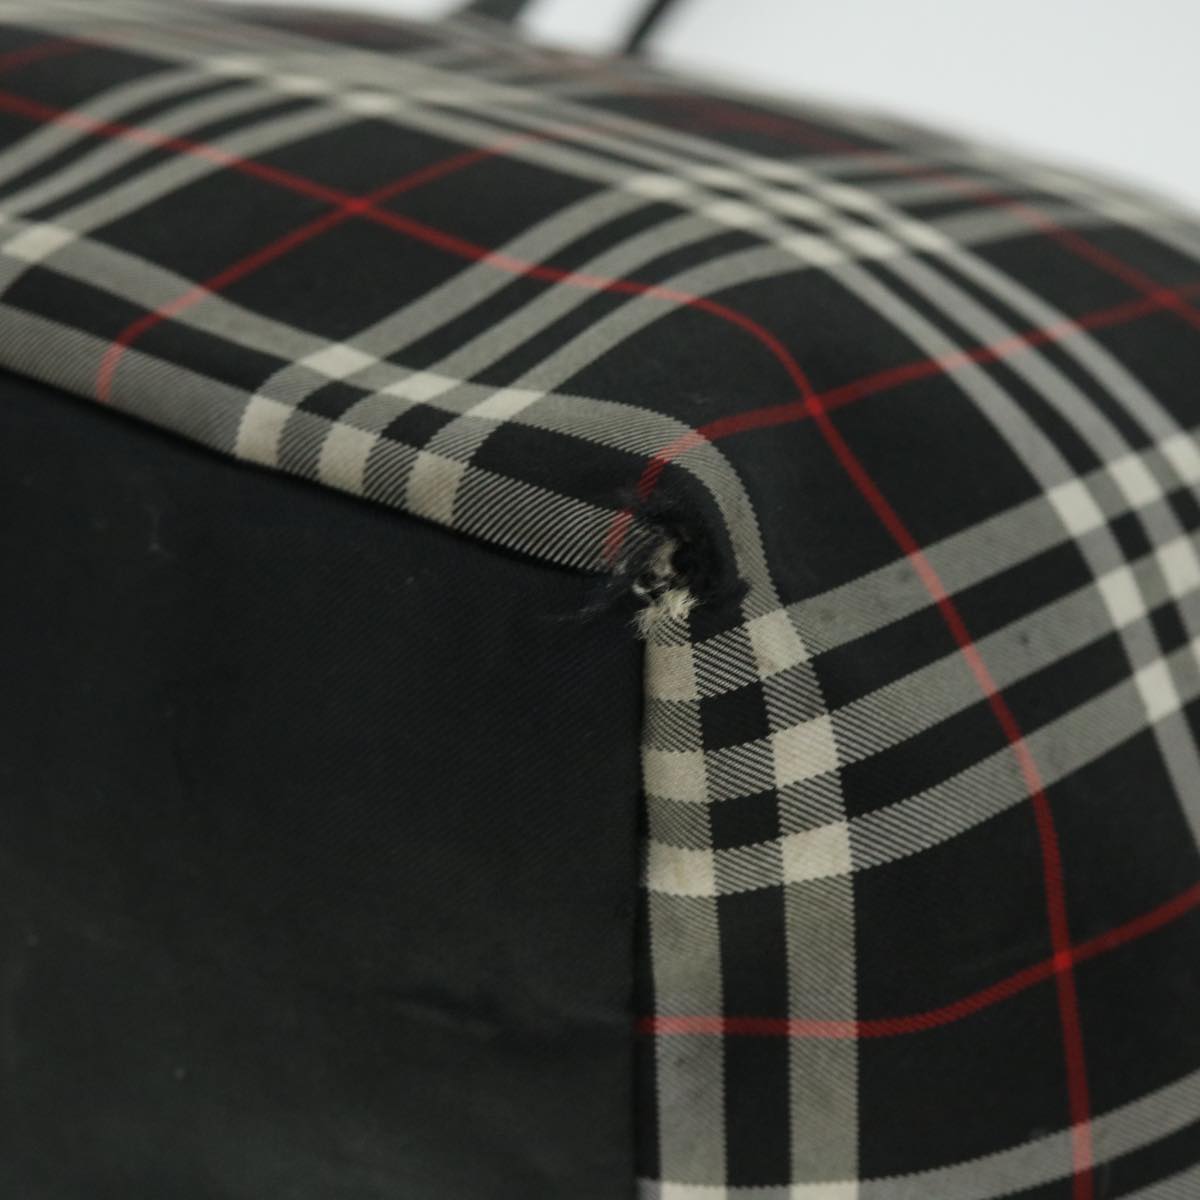 Burberrys Nova Check Blue Label Shoulder Bag Nylon Leather Black Red Auth 51911